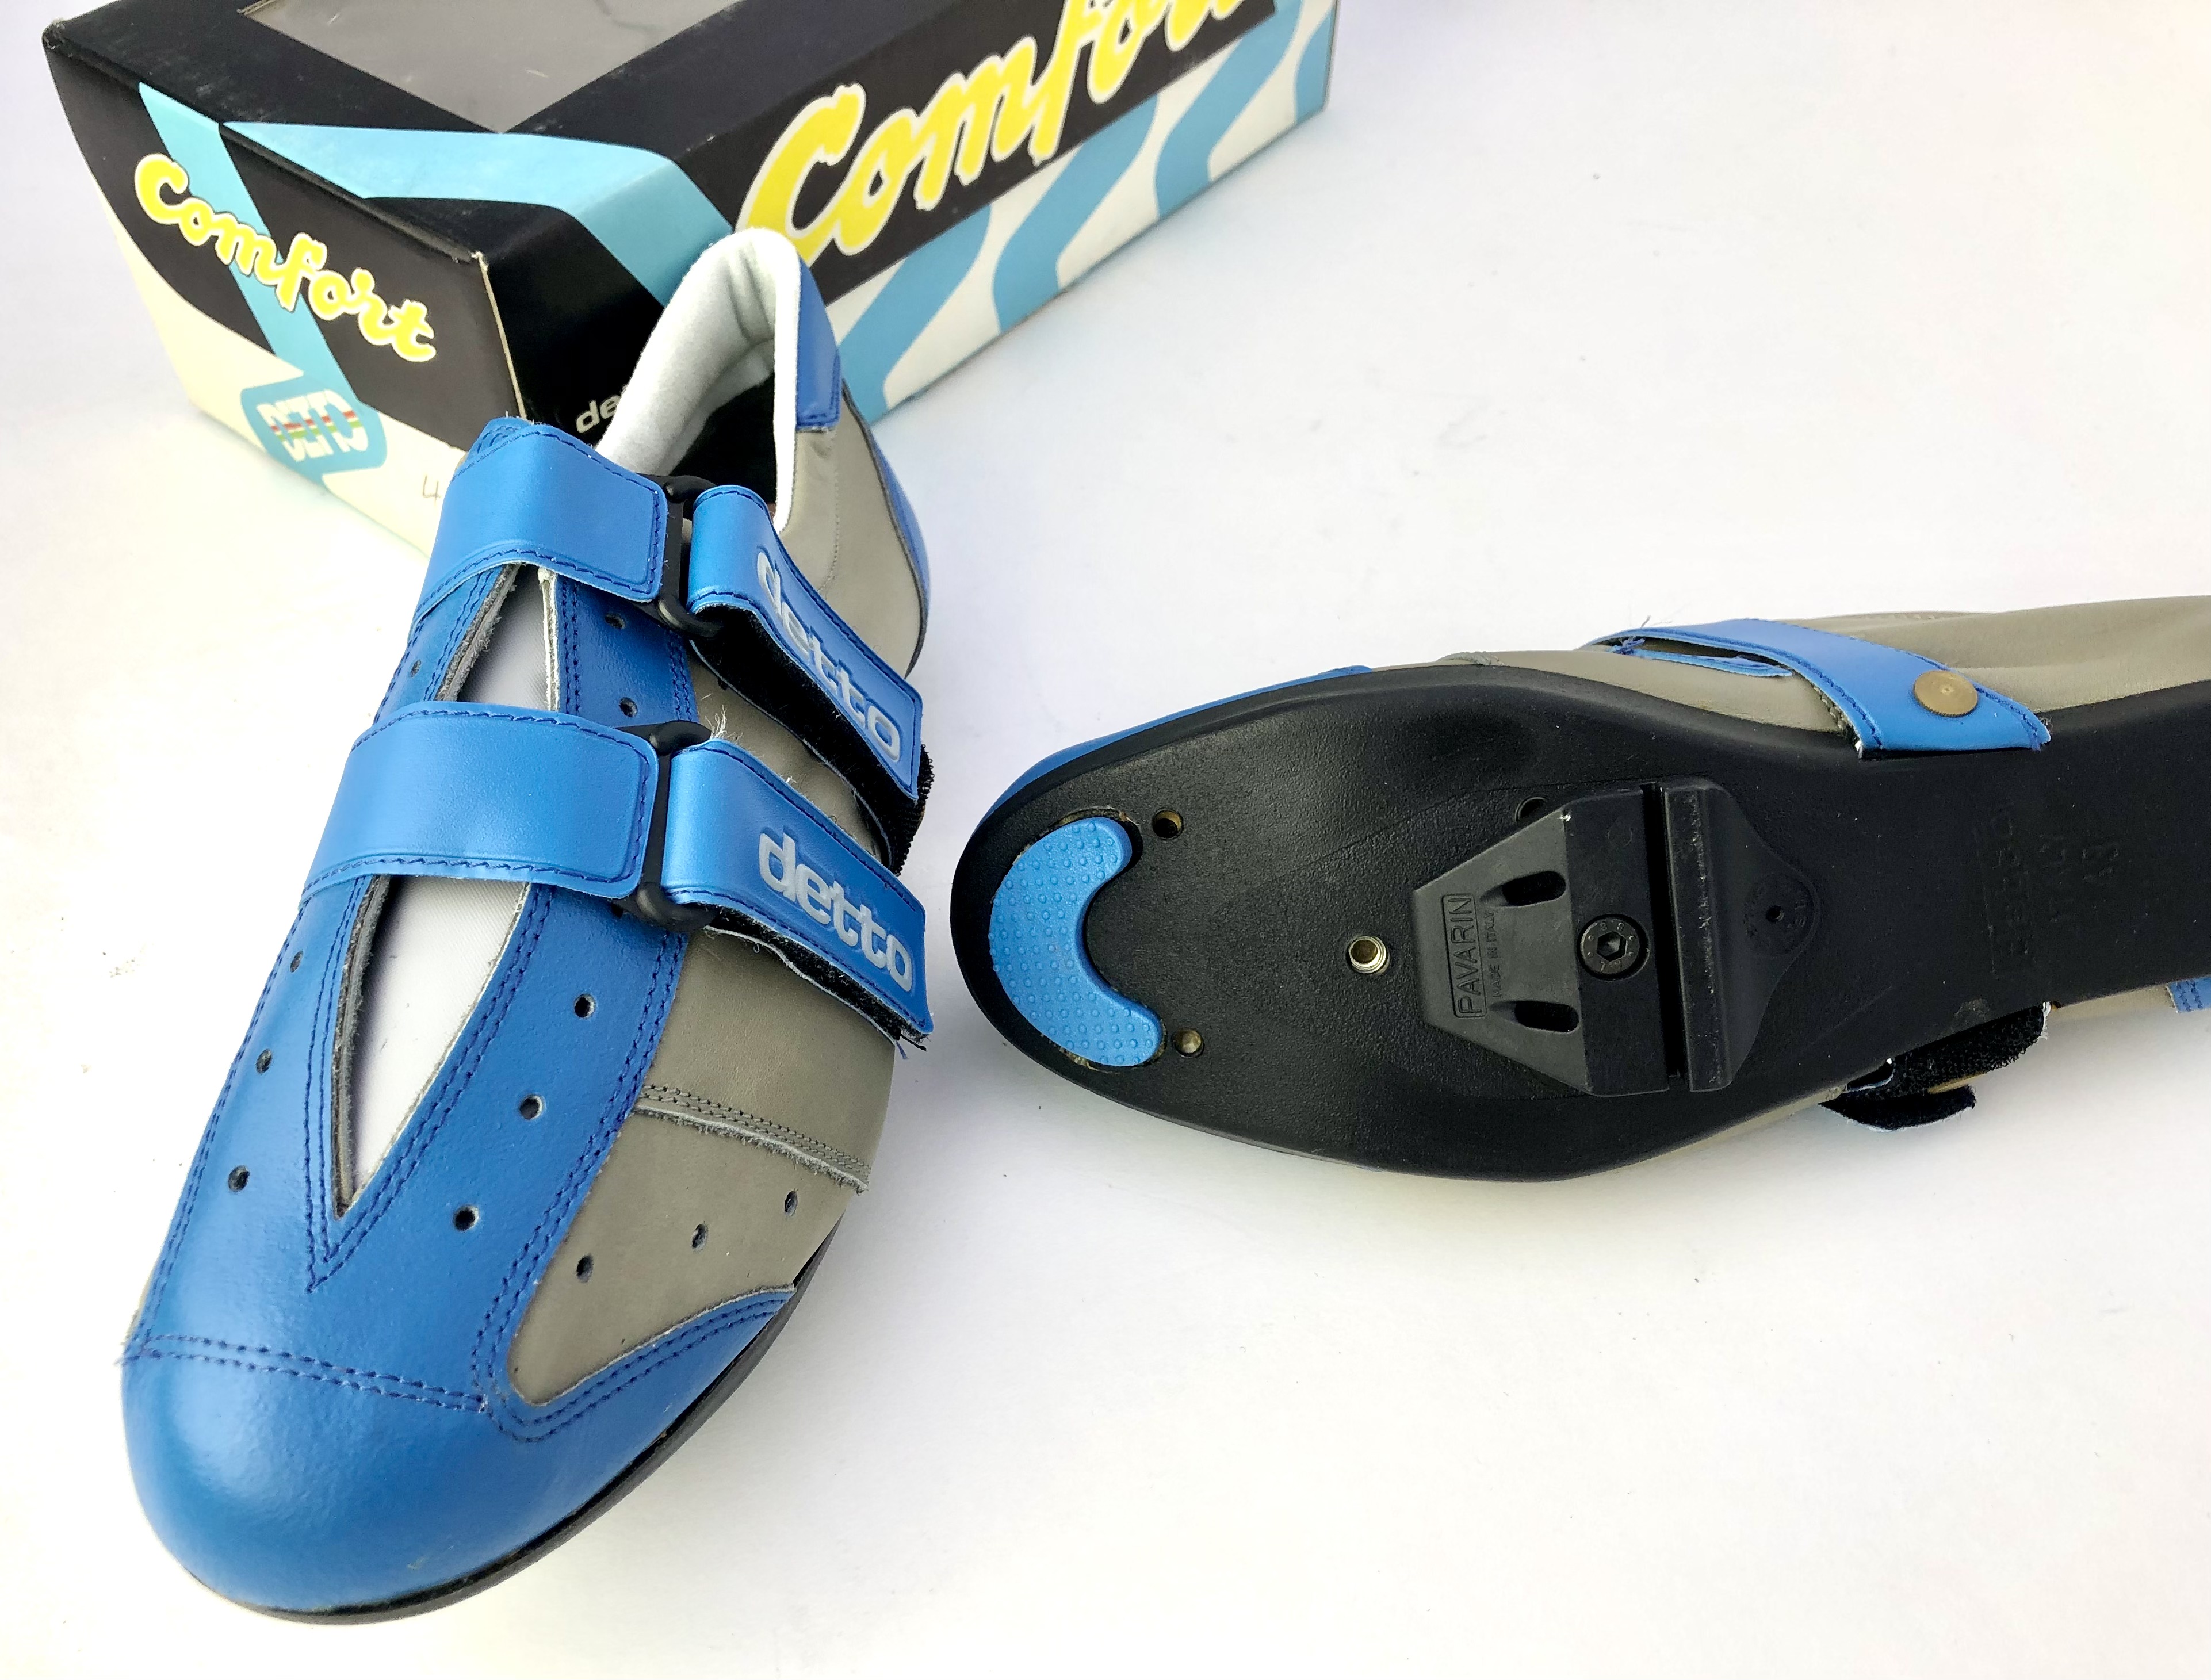 NOS Vintage Detto Pietro Mod. 230 Comfort Blu Cycling Shoes Size 40